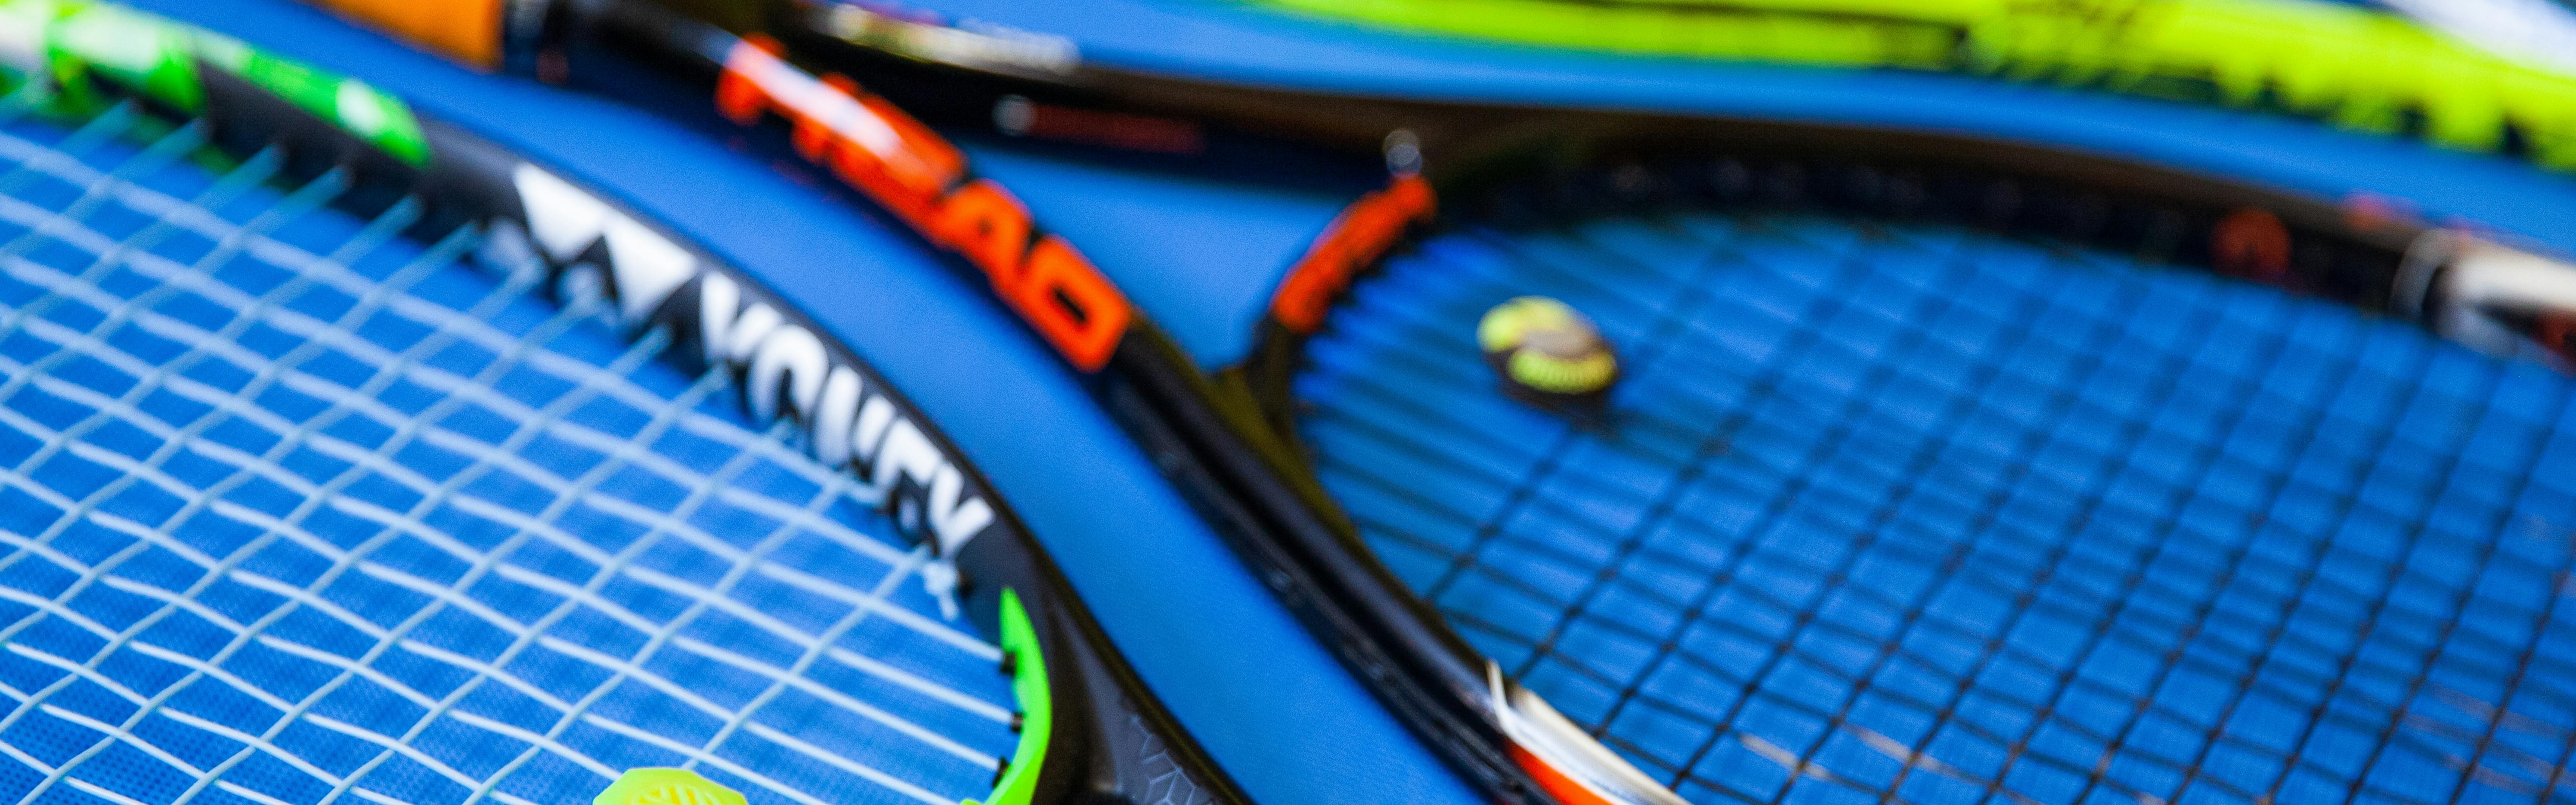 The 9 Best Tennis Racket Brands